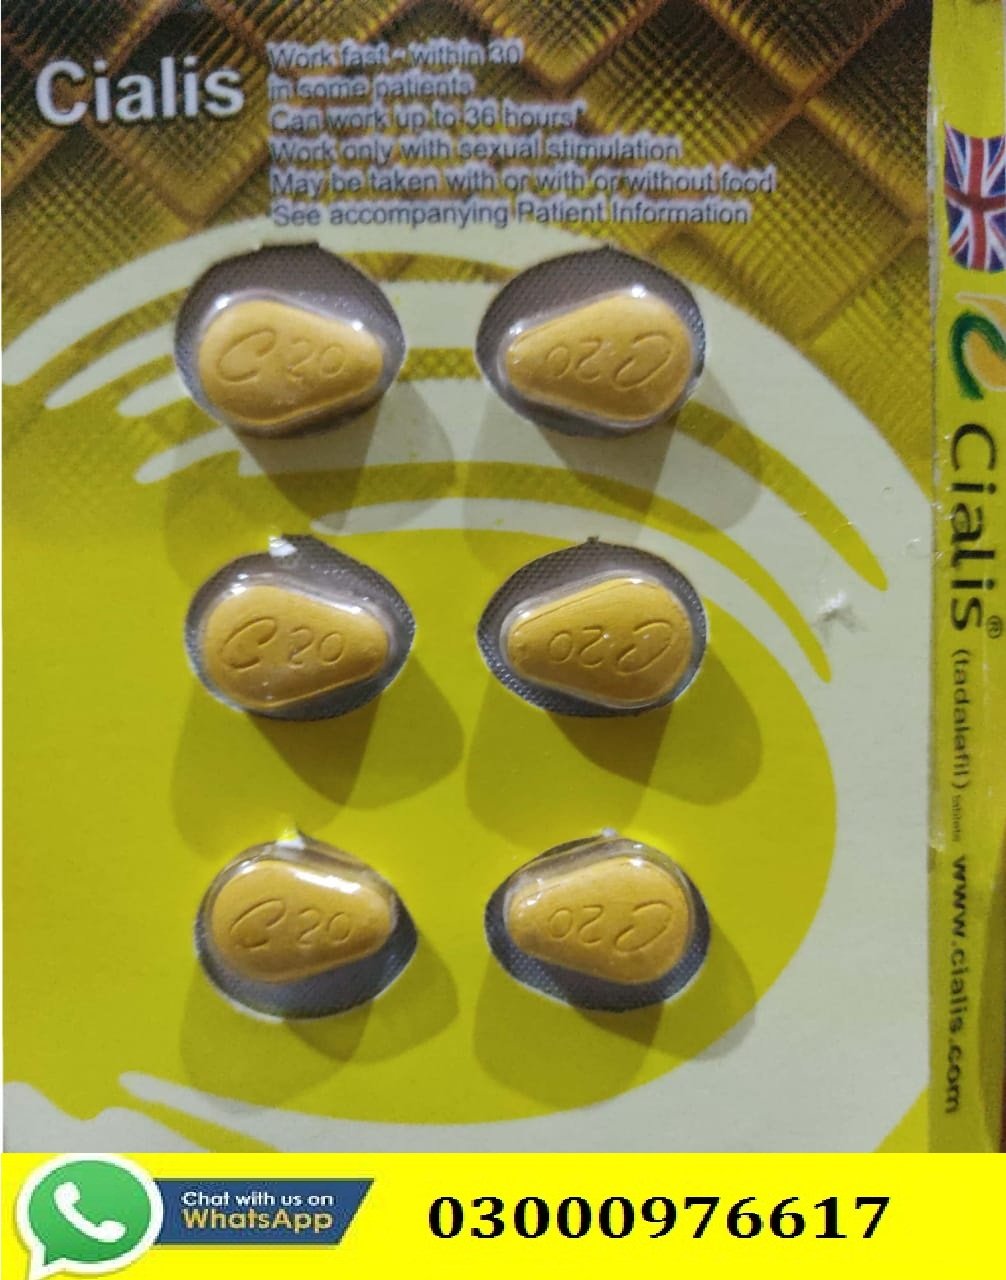 Cialis 6 Tablets in Mirpur Khas -03000976617 -etsyherbal.com